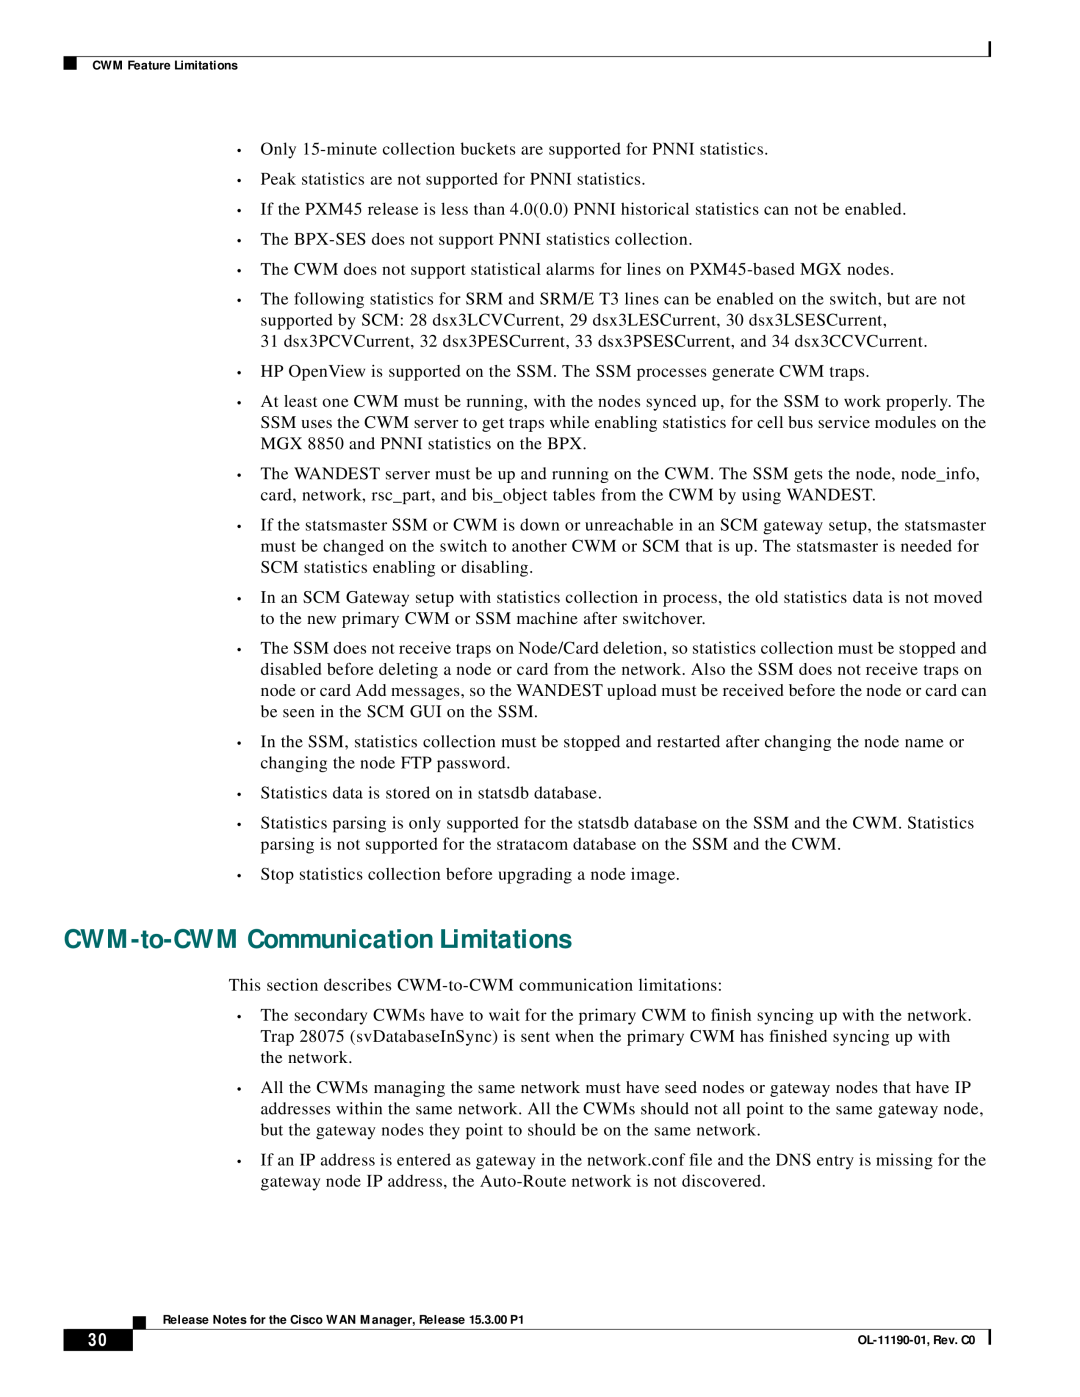 Cisco Systems 15.3.00P1 manual CWM-to-CWM Communication Limitations 